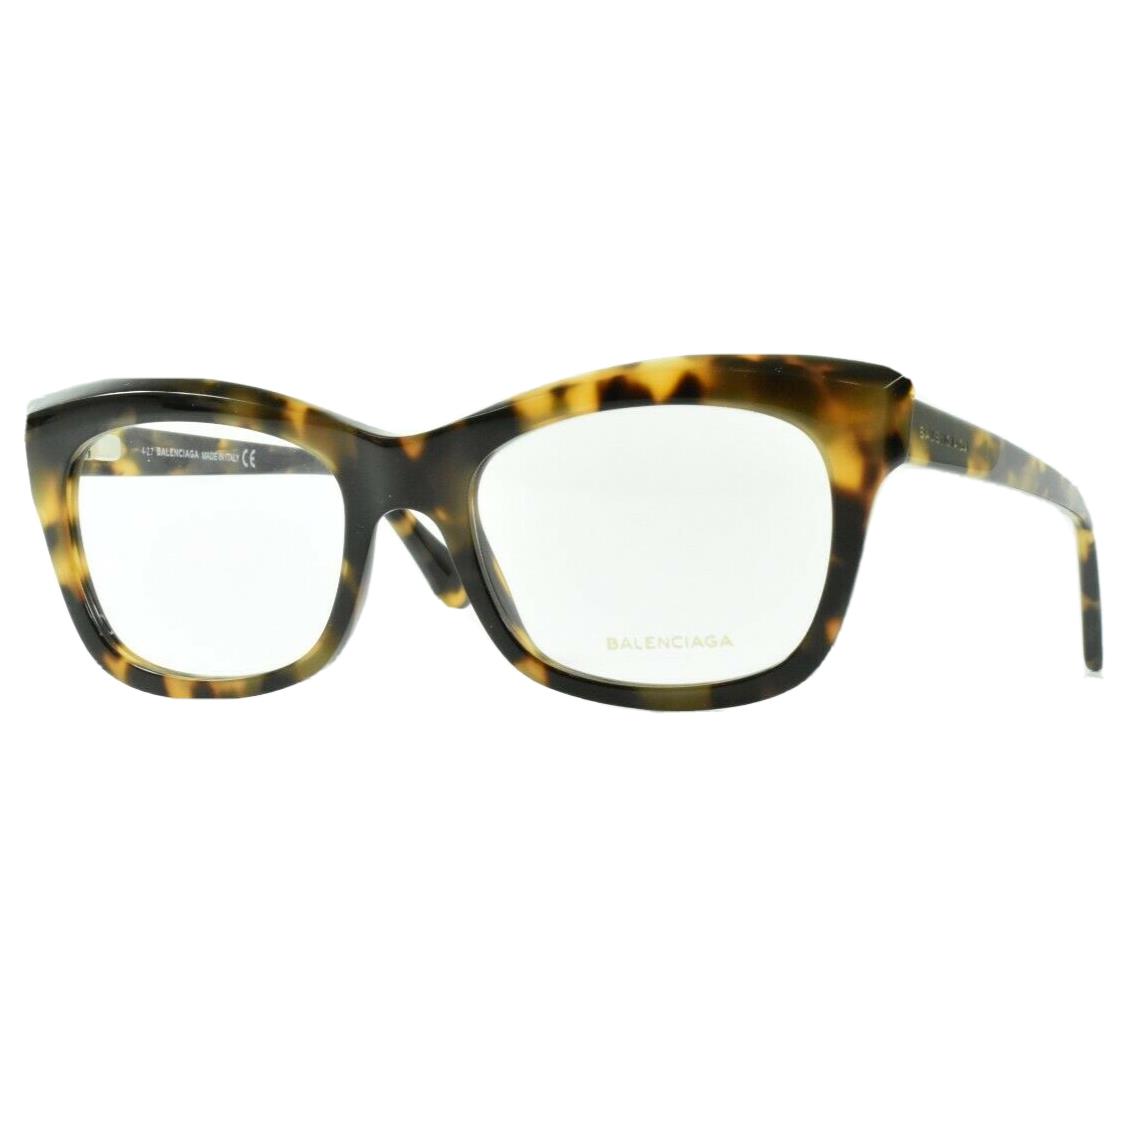 Balenciaga BA5069 052 Full Frame Square Tortoiseshell Eyeglasses